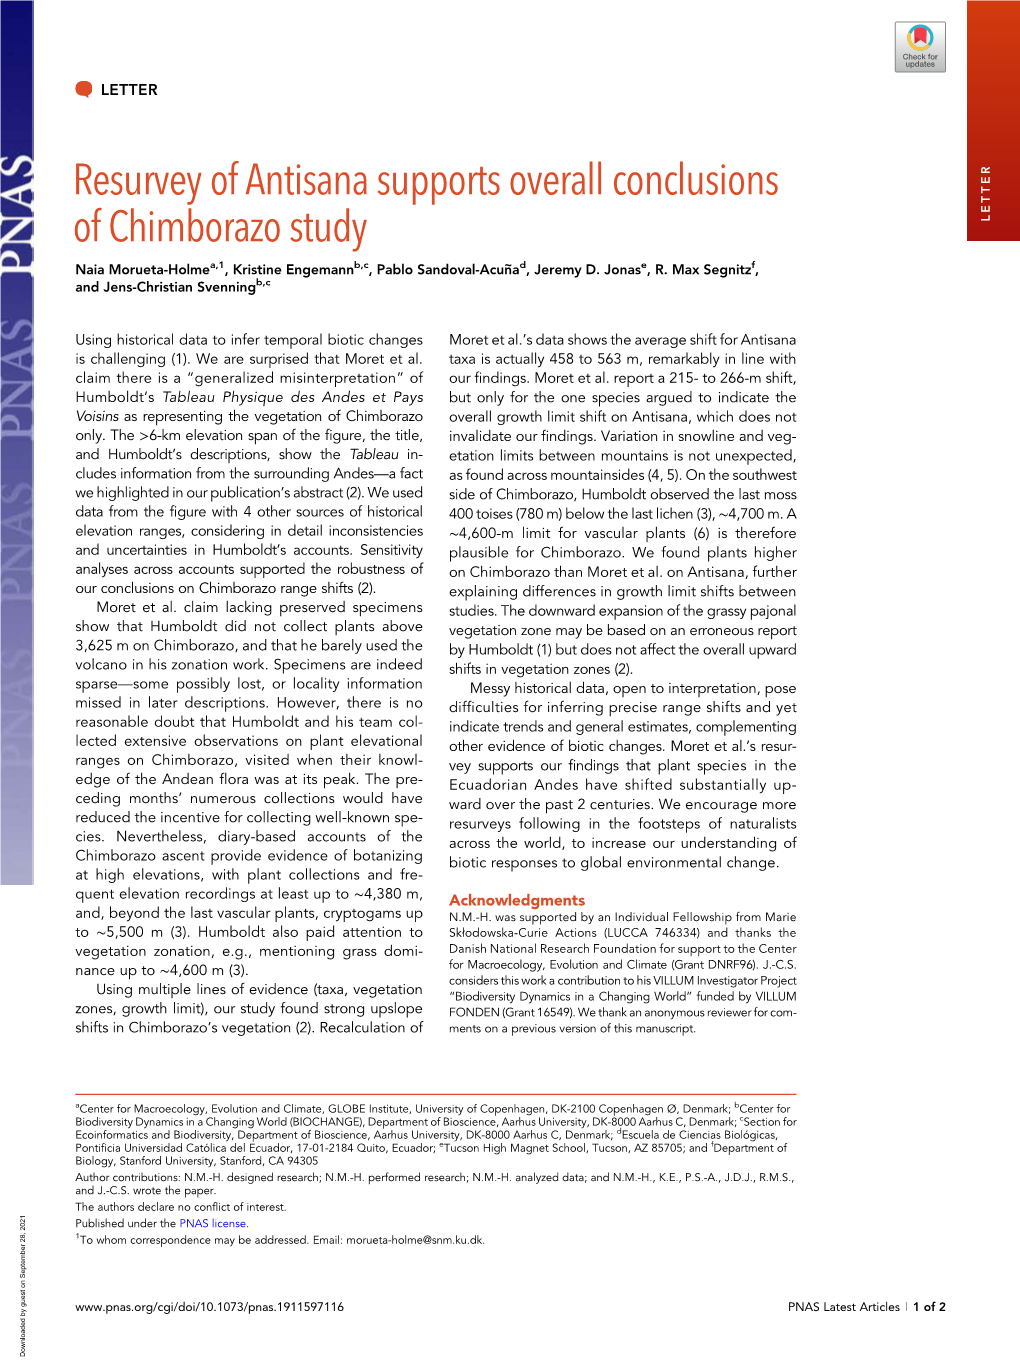 Resurvey of Antisana Supports Overall Conclusions of Chimborazo Study